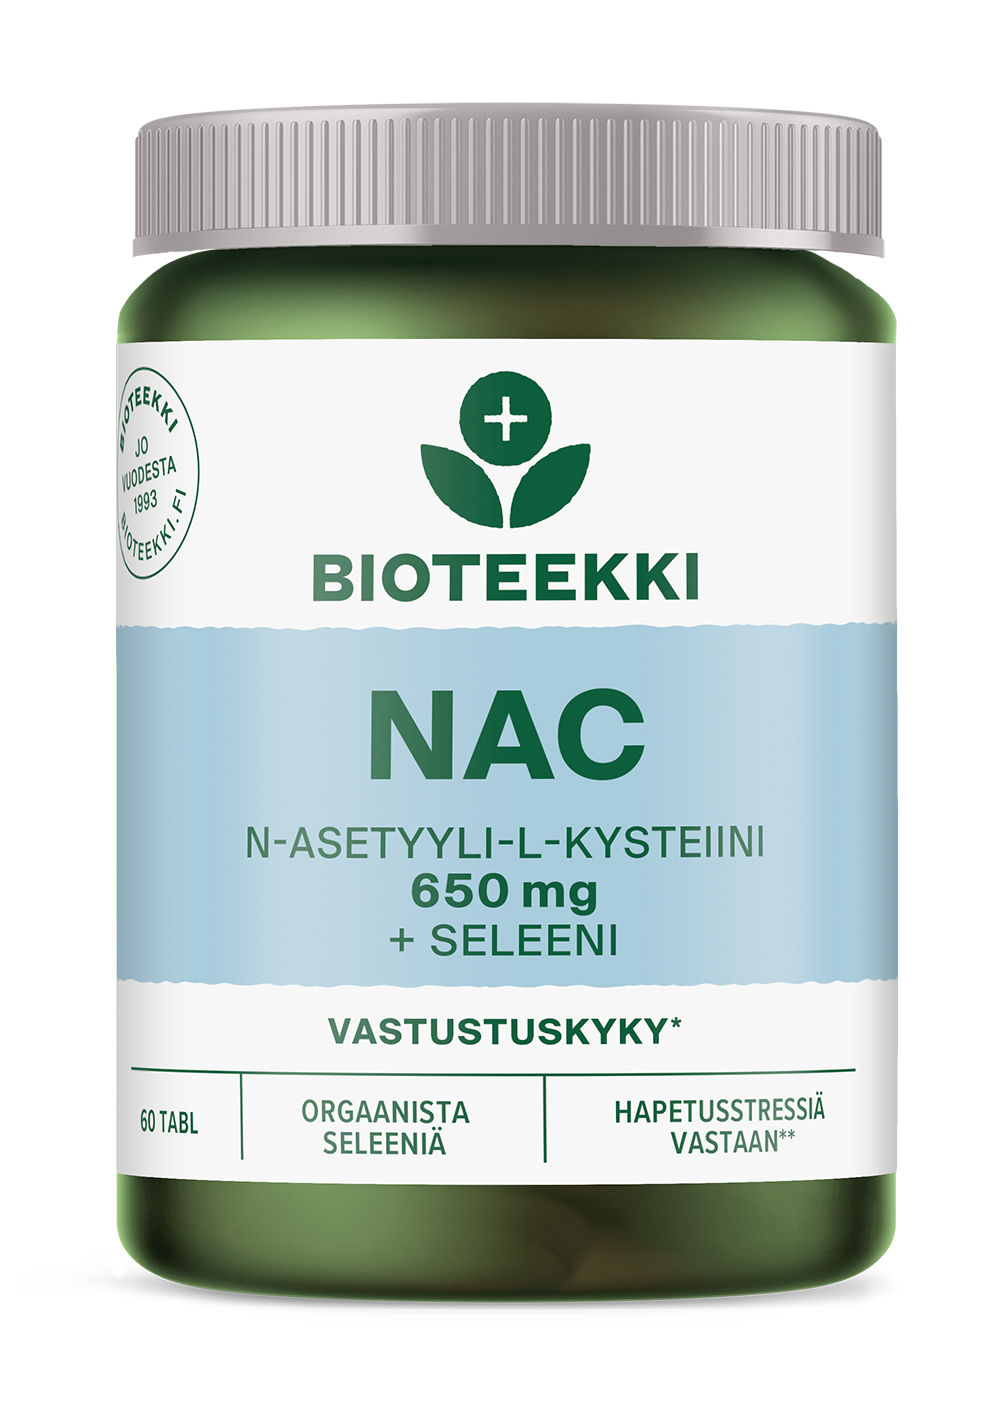 Bioteekki NAC 650 mg + Seleeni 60 tabl.